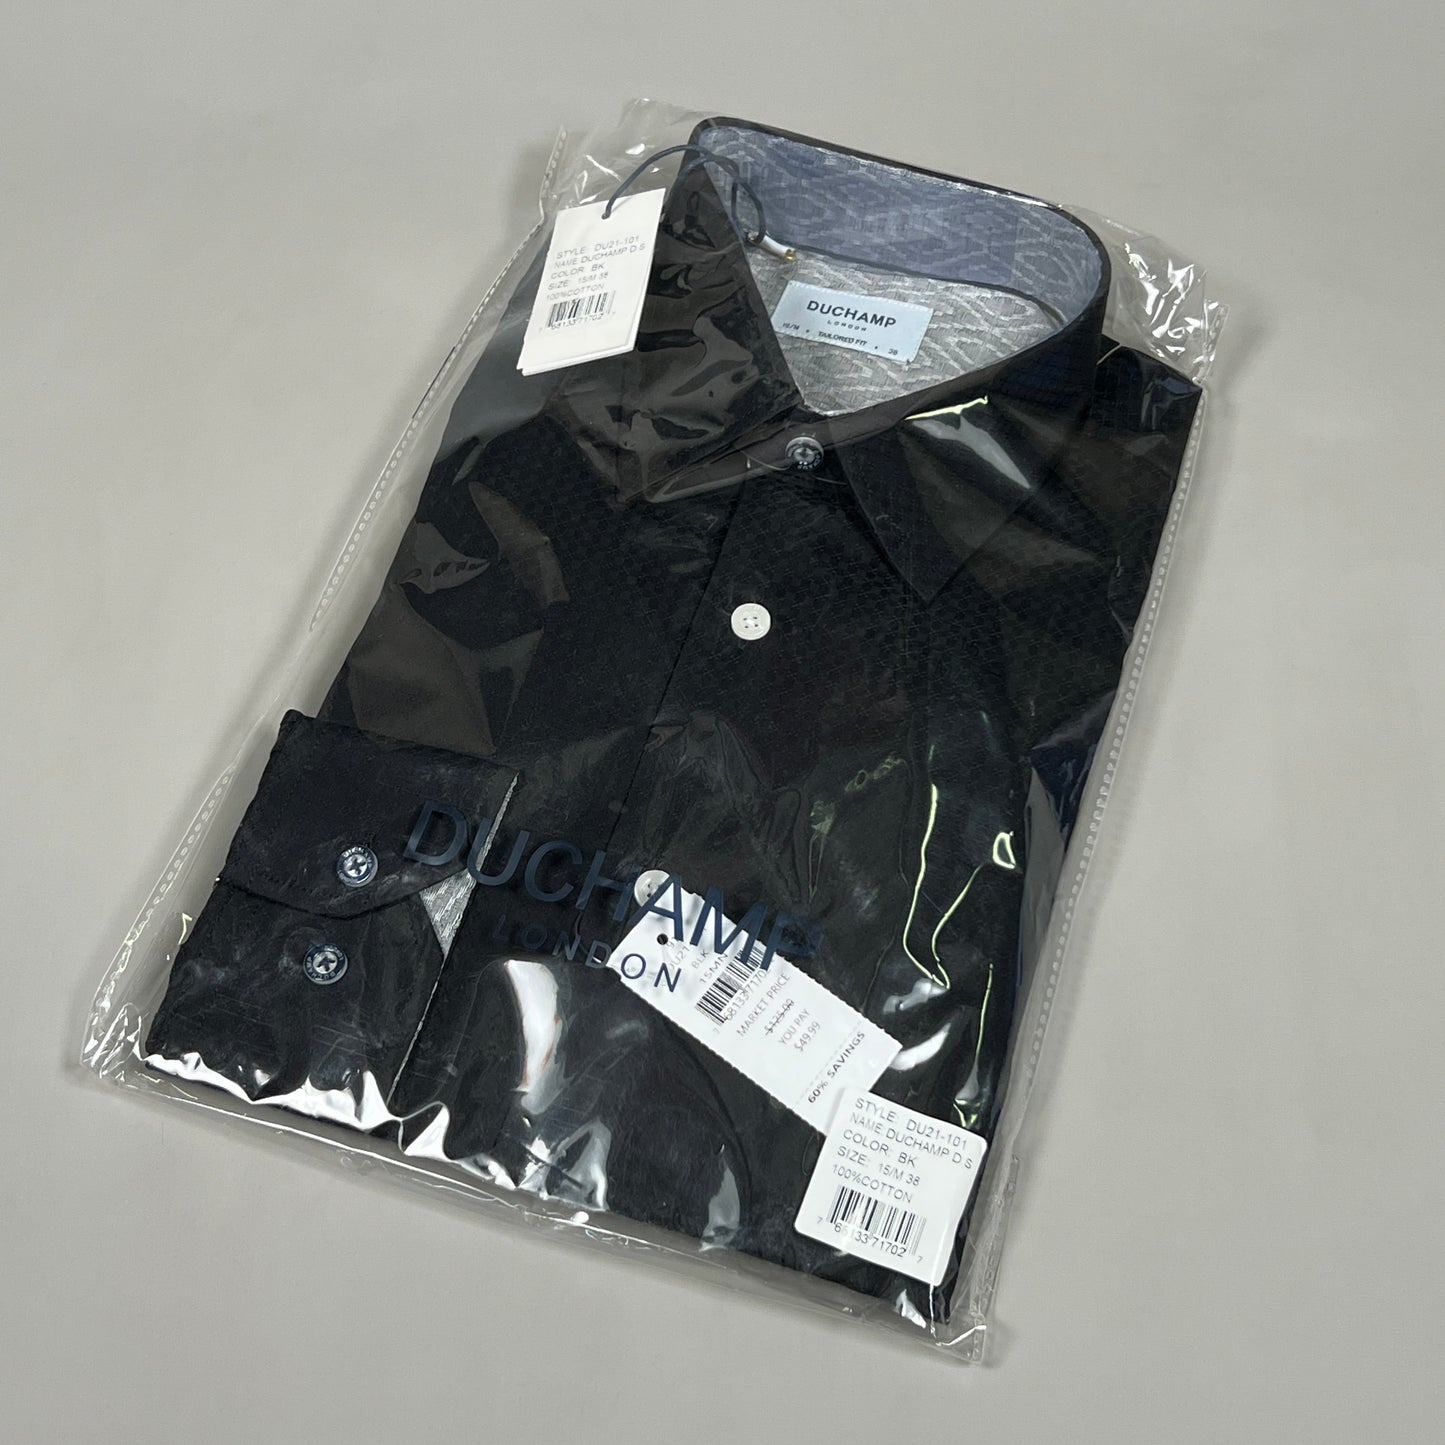 DUCHAMP LONDON Black Patterned Tailored-fit Dress Shirt Men's Sz M / 38 / 15 (New)